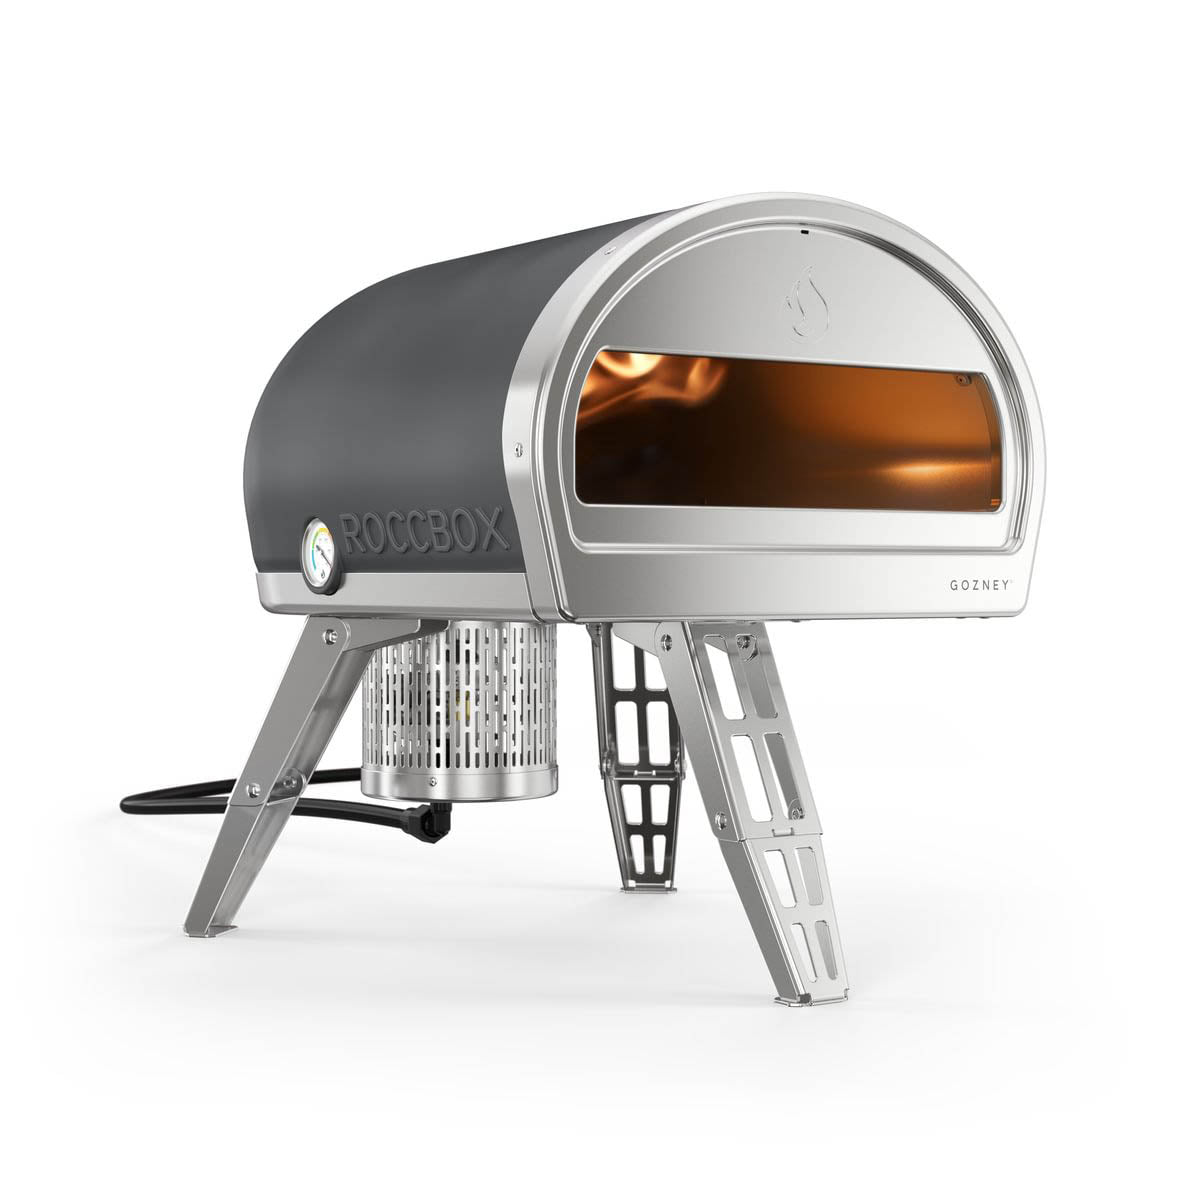 Gozney Roccbox Portable Outdoor Pizza Oven Restaurant Grade with Gas Burner Grey